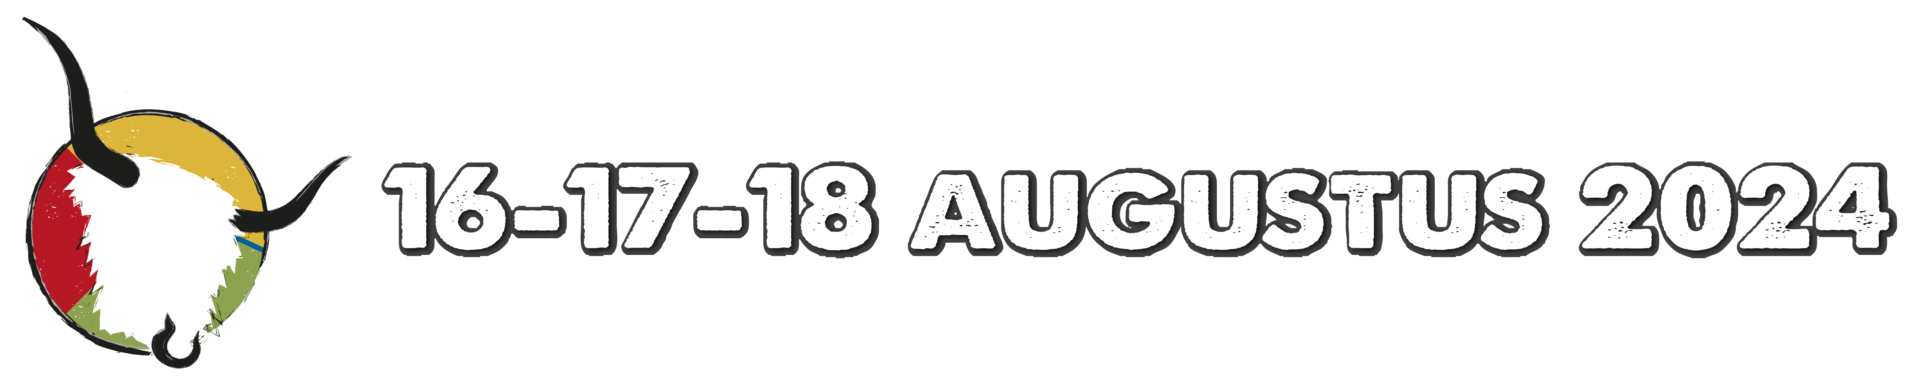 Buurser Volks Feest | 16-17-18 augustus 2024